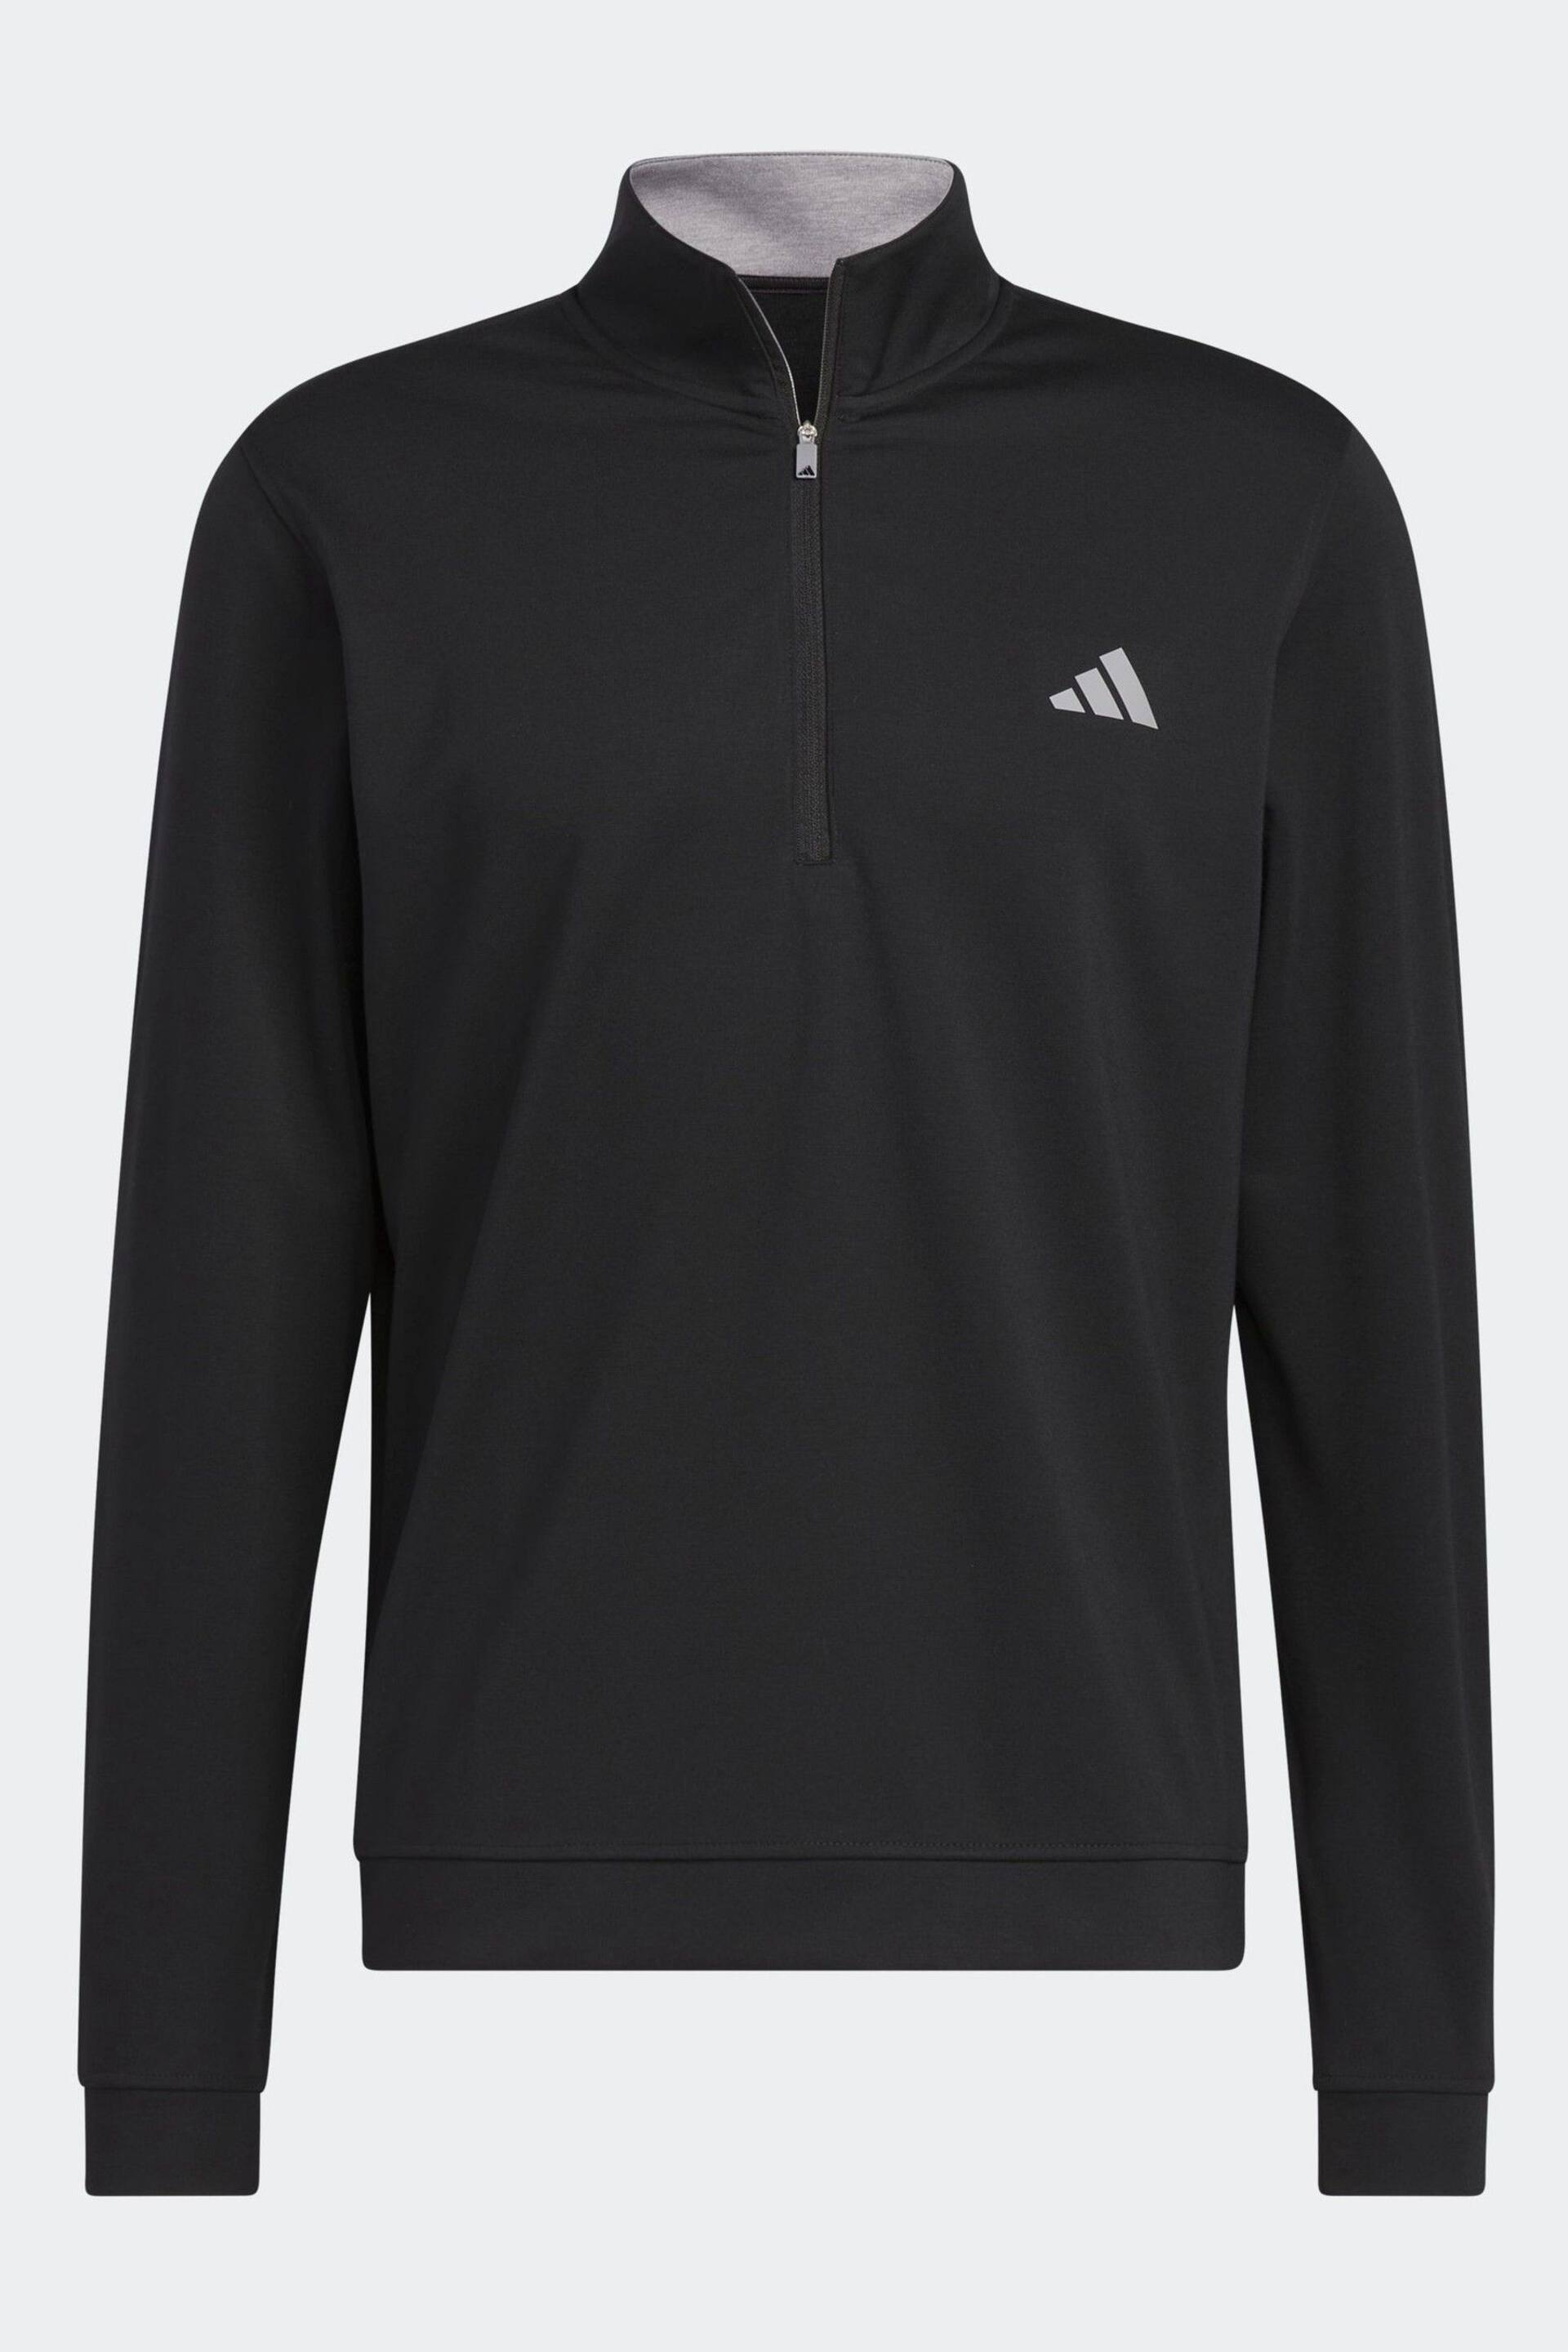 adidas Golf Elevated 1/4-Zip Black Sweatshirt - Image 7 of 7